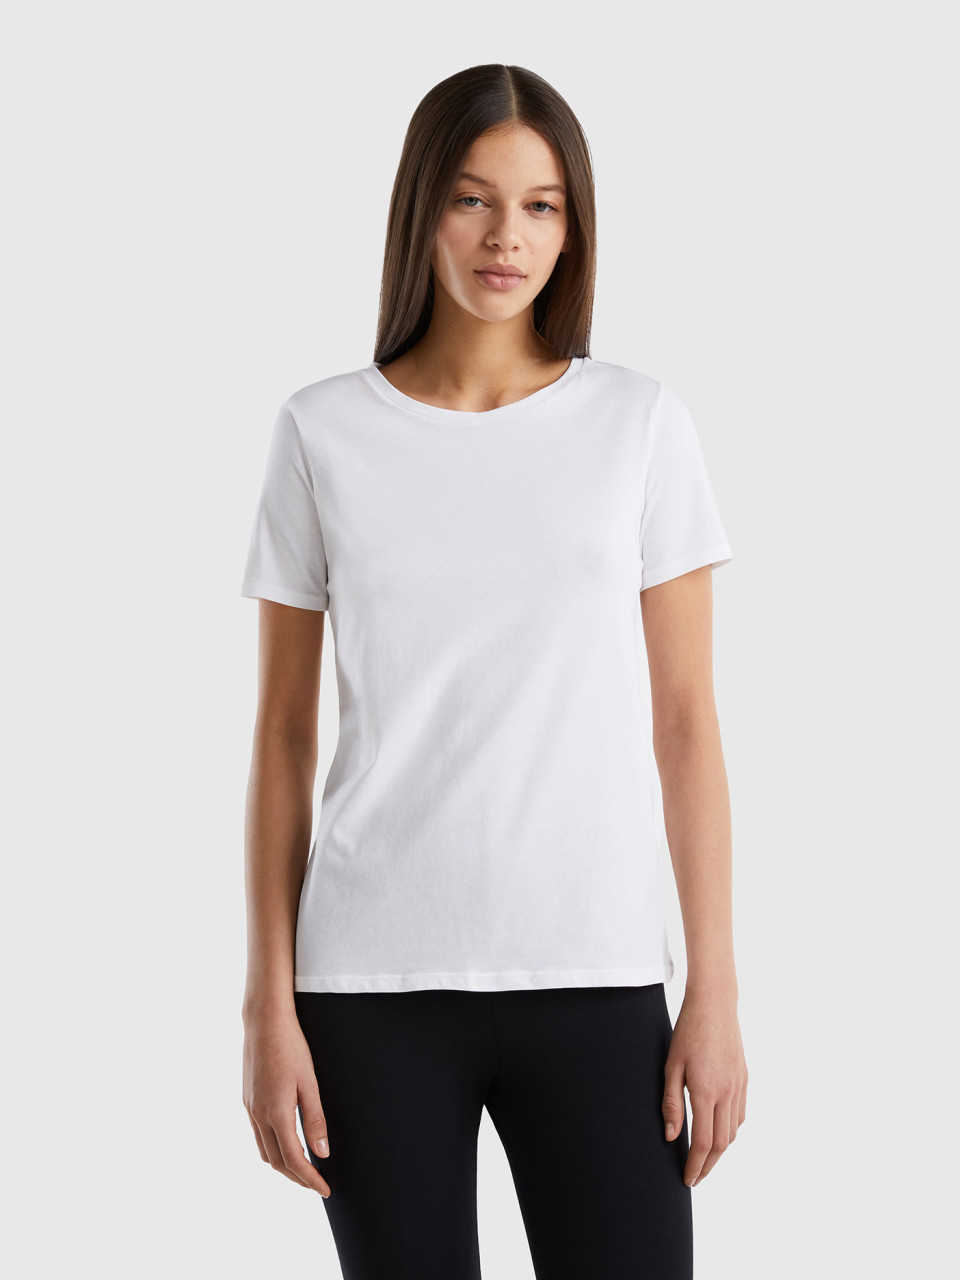 Benetton, Super Stretch Organic Cotton T-shirt, White, Women